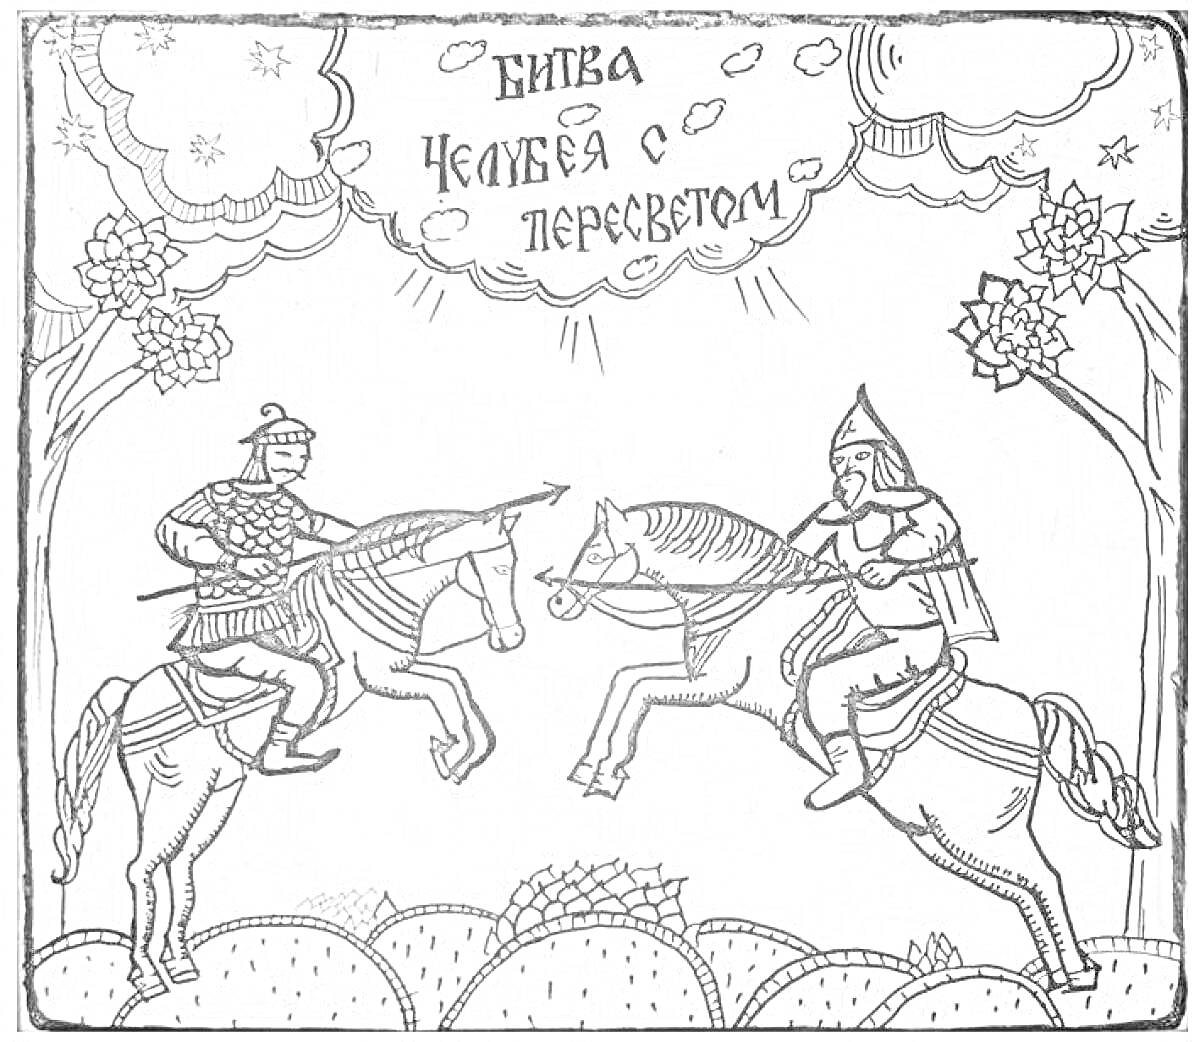 Раскраска Битва Челубея с Пересветом, два всадника на лошадях с копьями, облака, деревья, холмы